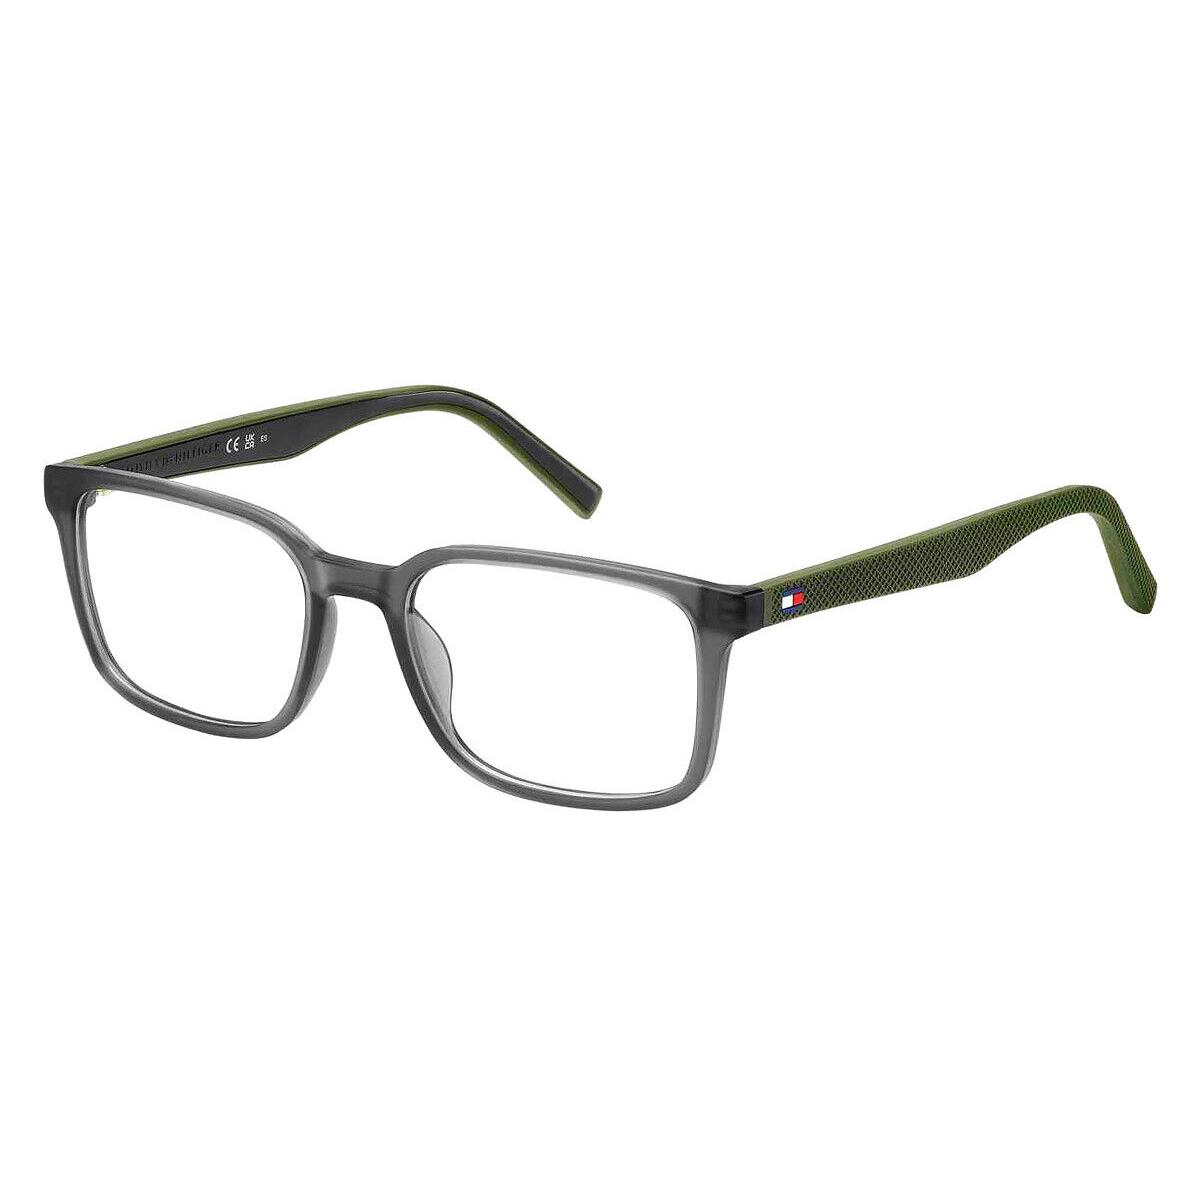 Tommy Hilfiger Thf Eyeglasses Men Matte Gray Green 53mm - Frame: Matte Gray Green, Lens: Demo